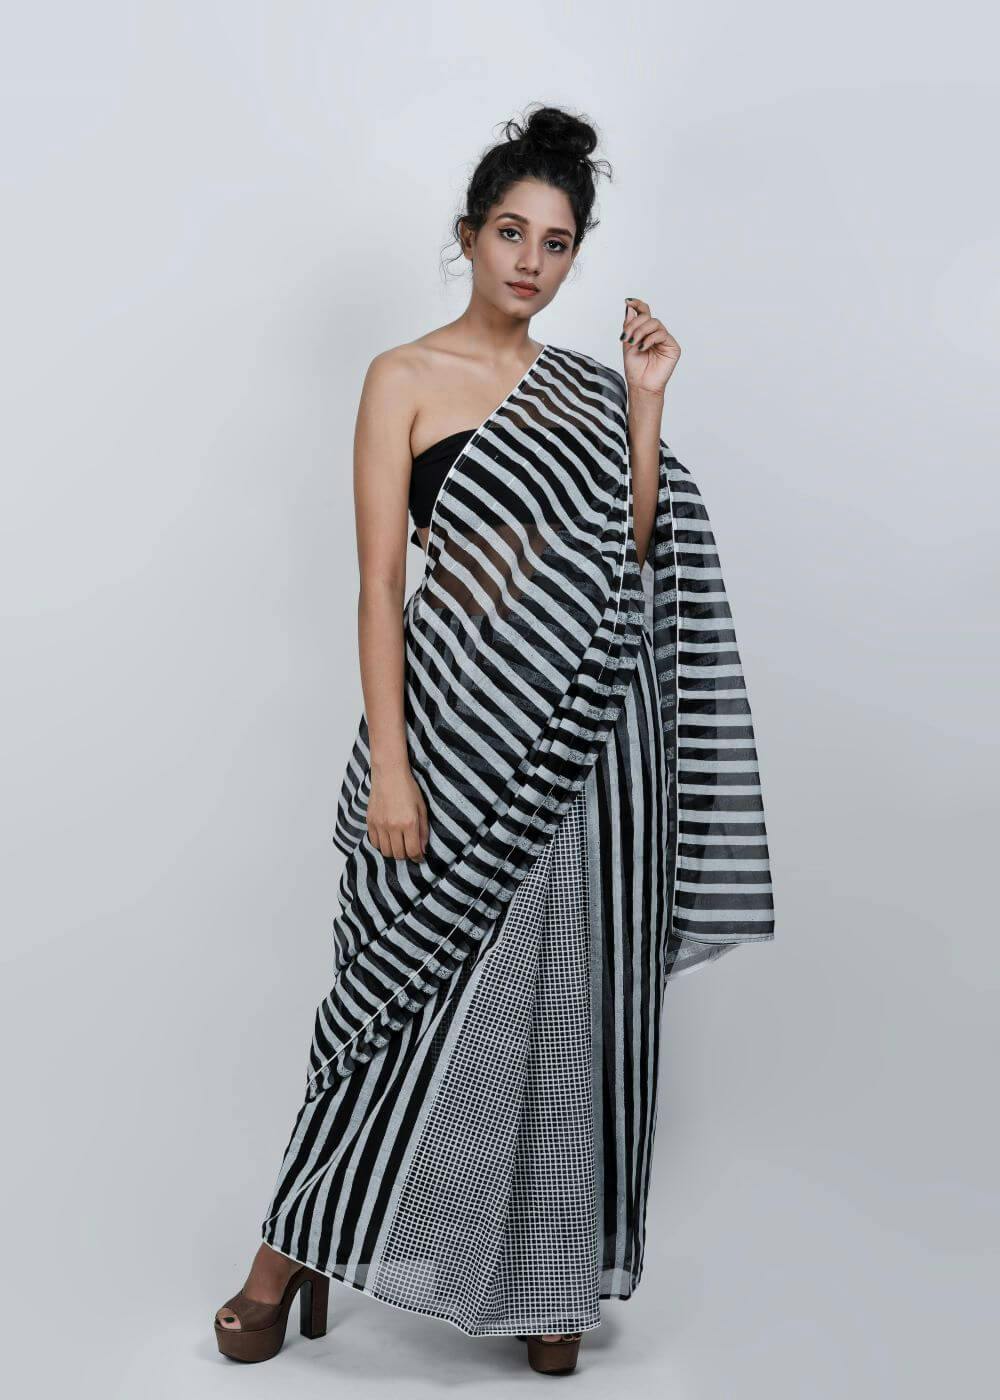 ATBW - Black Geometric Pattern Sari, a product by ATBW